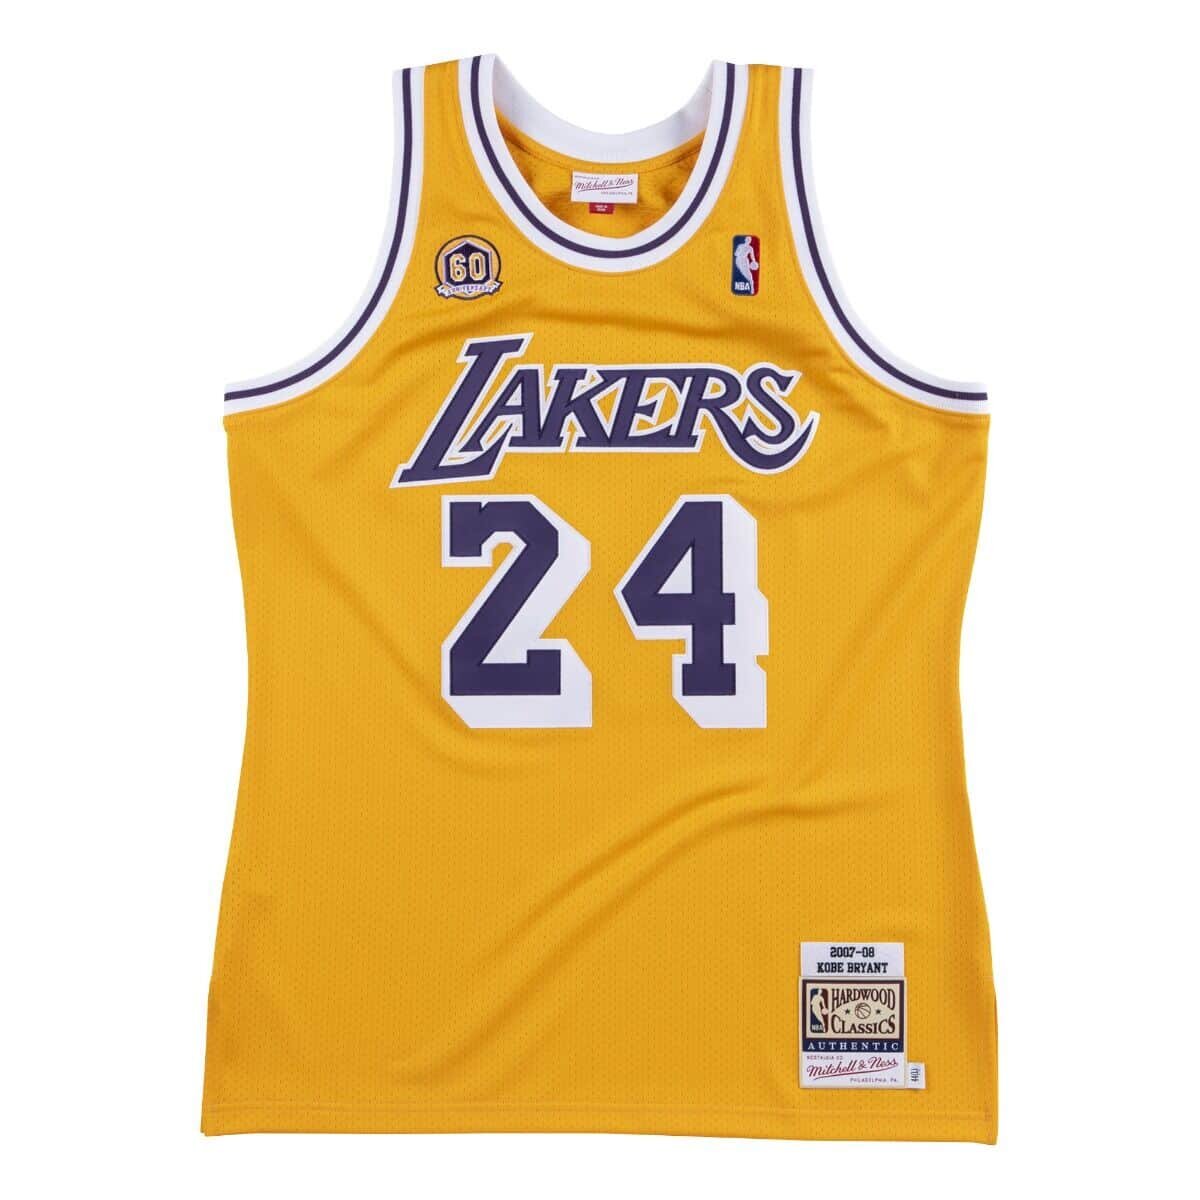 Lakers Kobe Bryant Jersey dress Yellow SIZE MEDIUM Bahrain